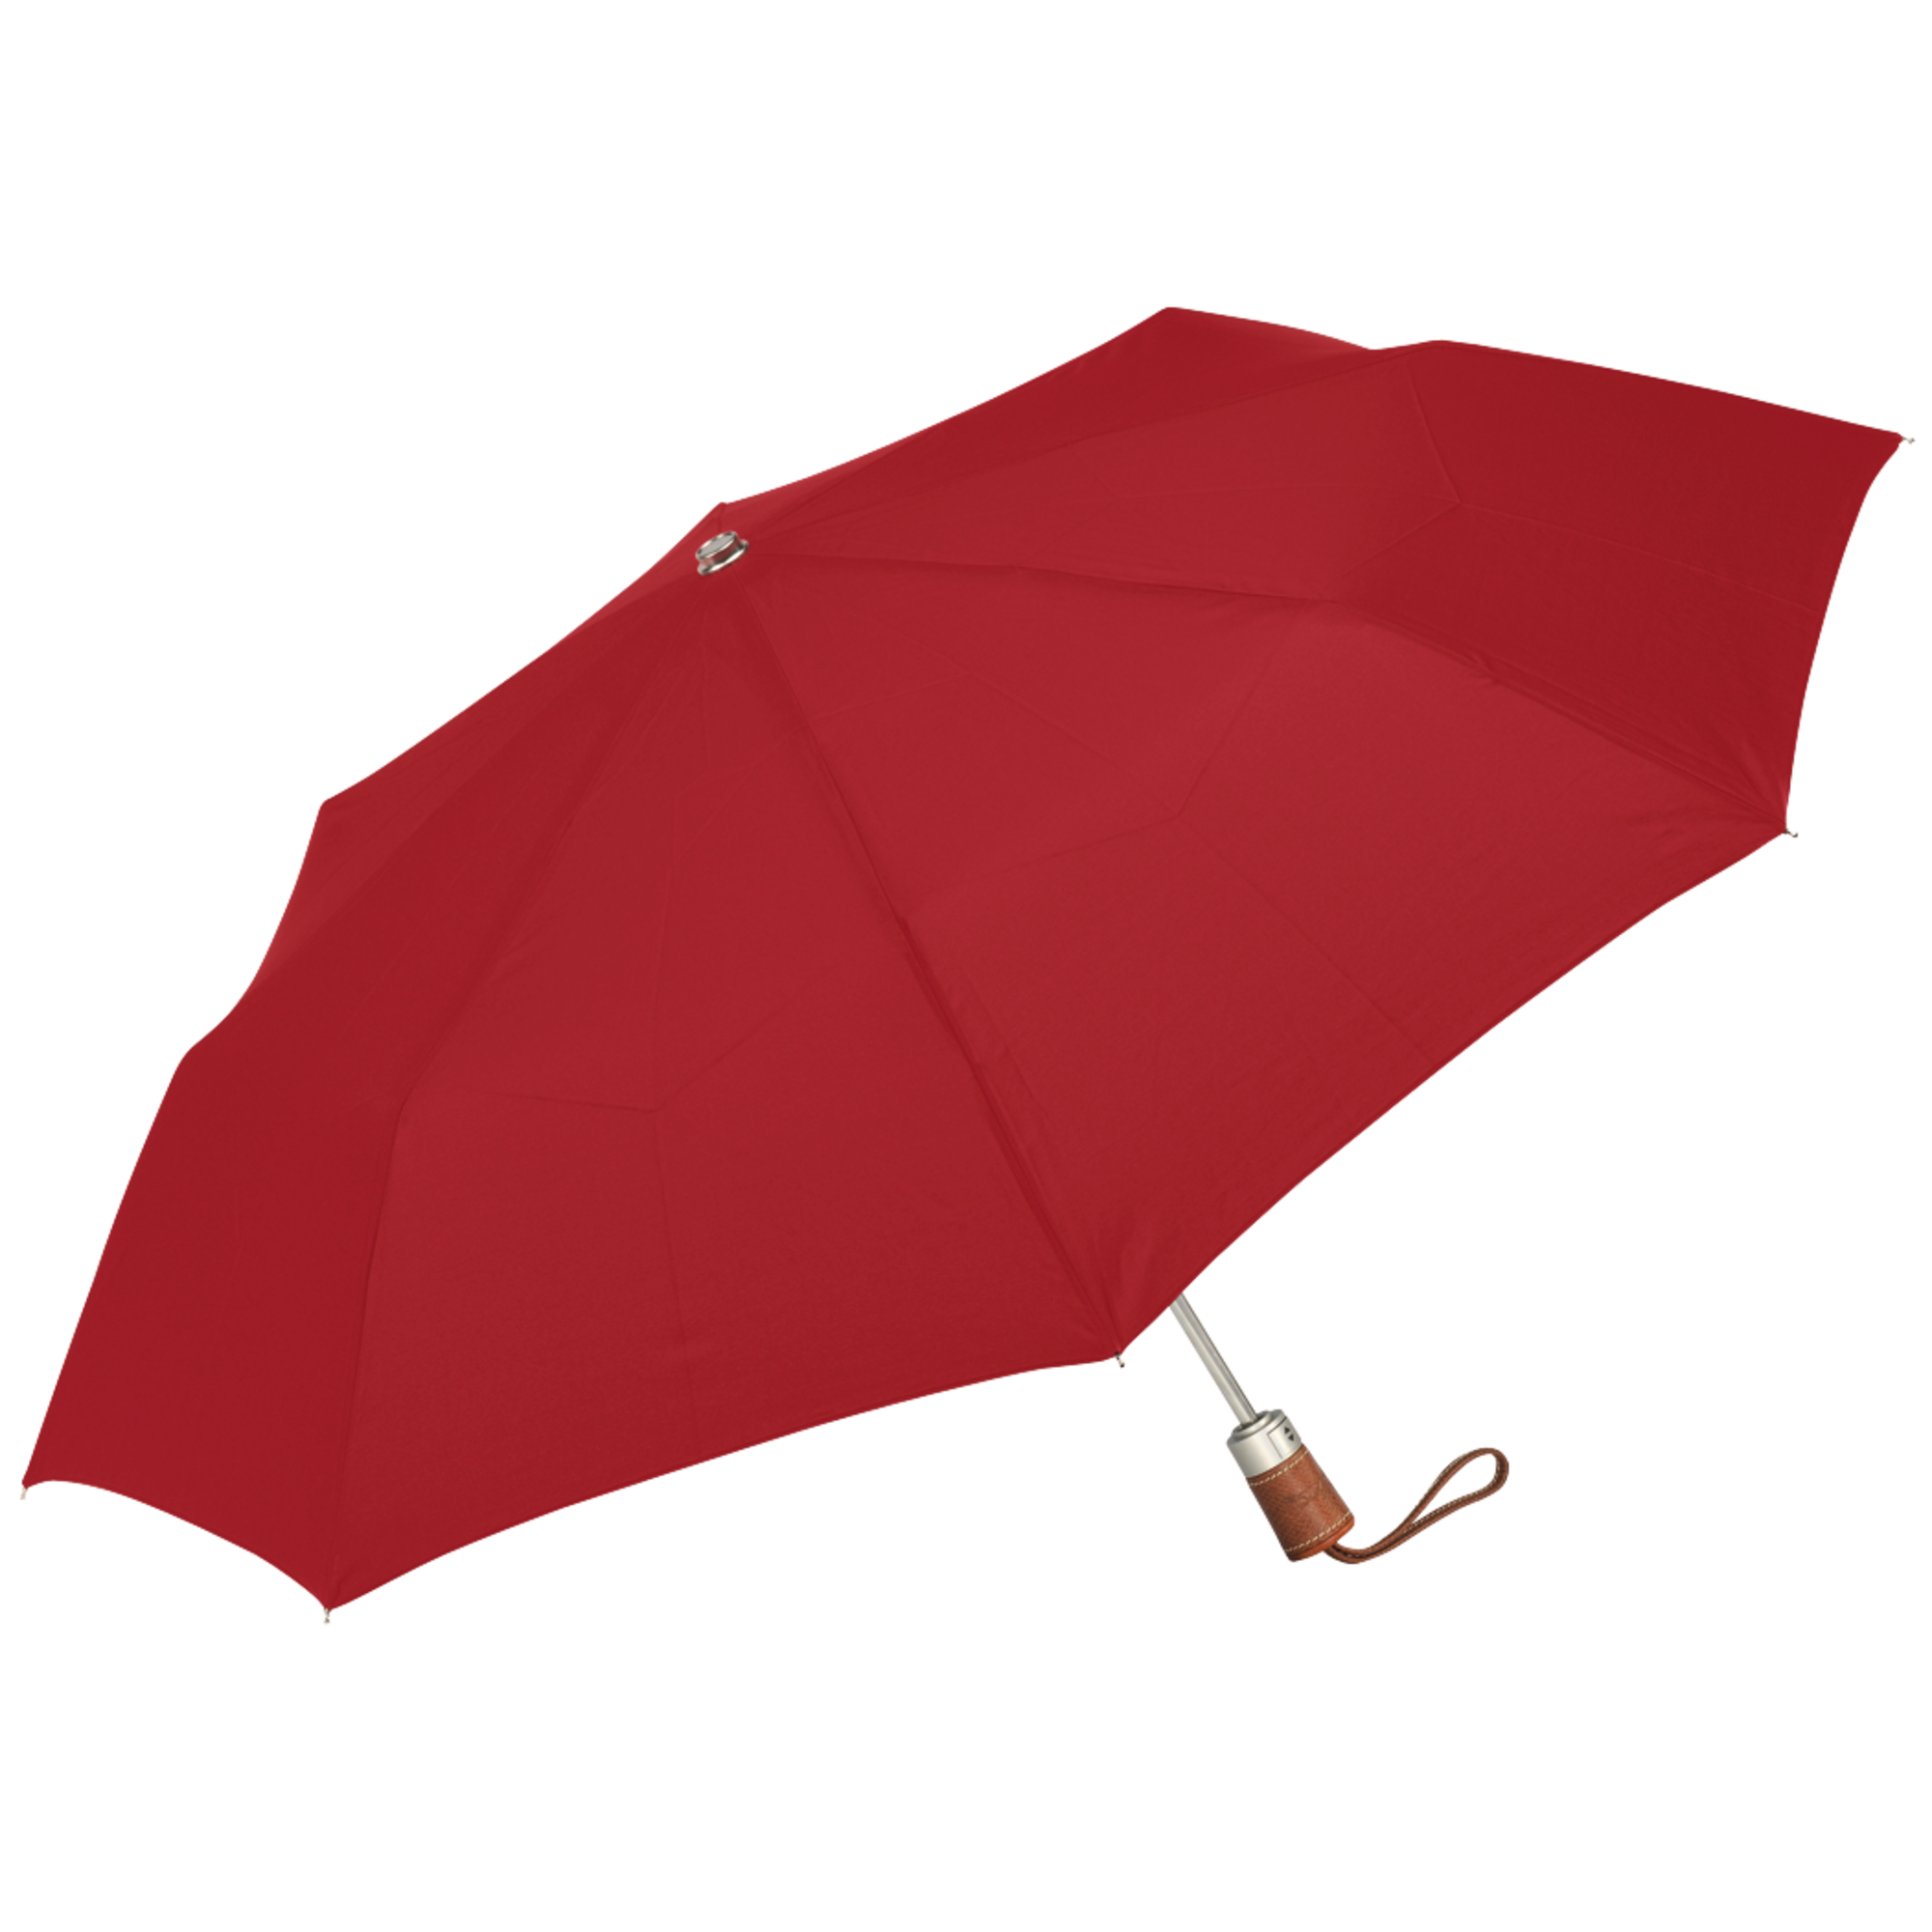 Retractable umbrella Parapluie homme 